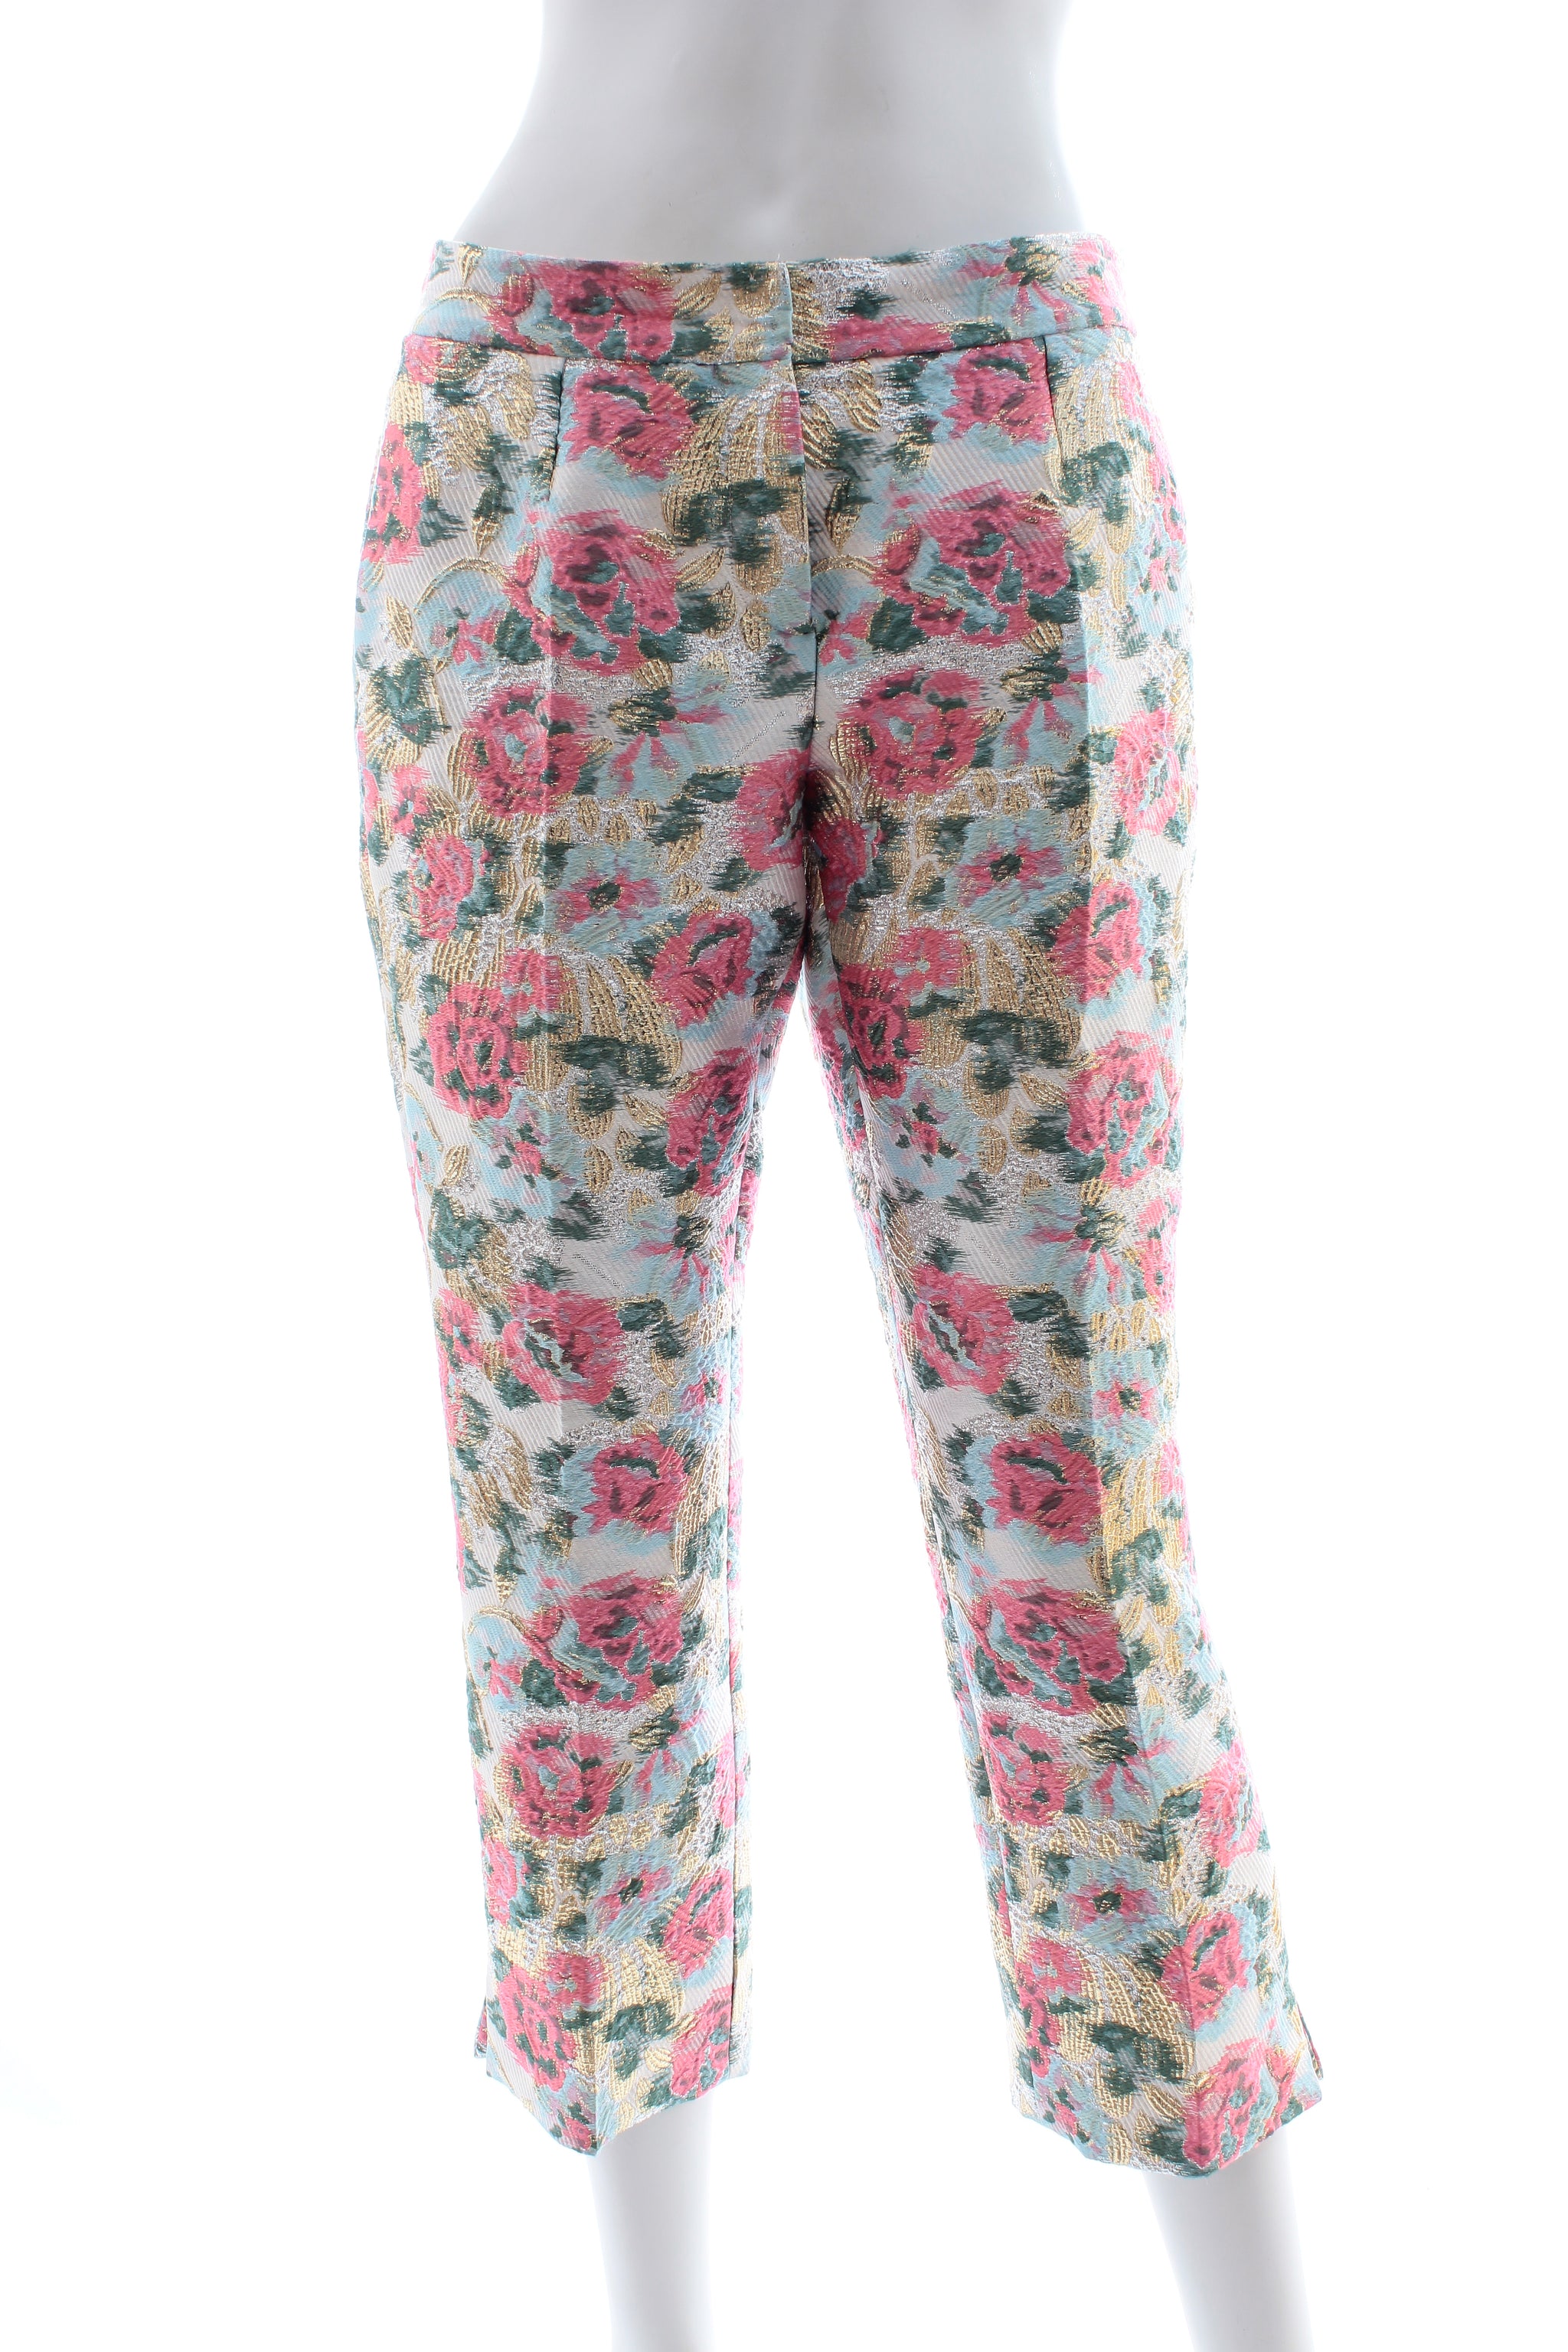 Erdem x H&M Floral Jacquard Trousers / Black Multi | eBay